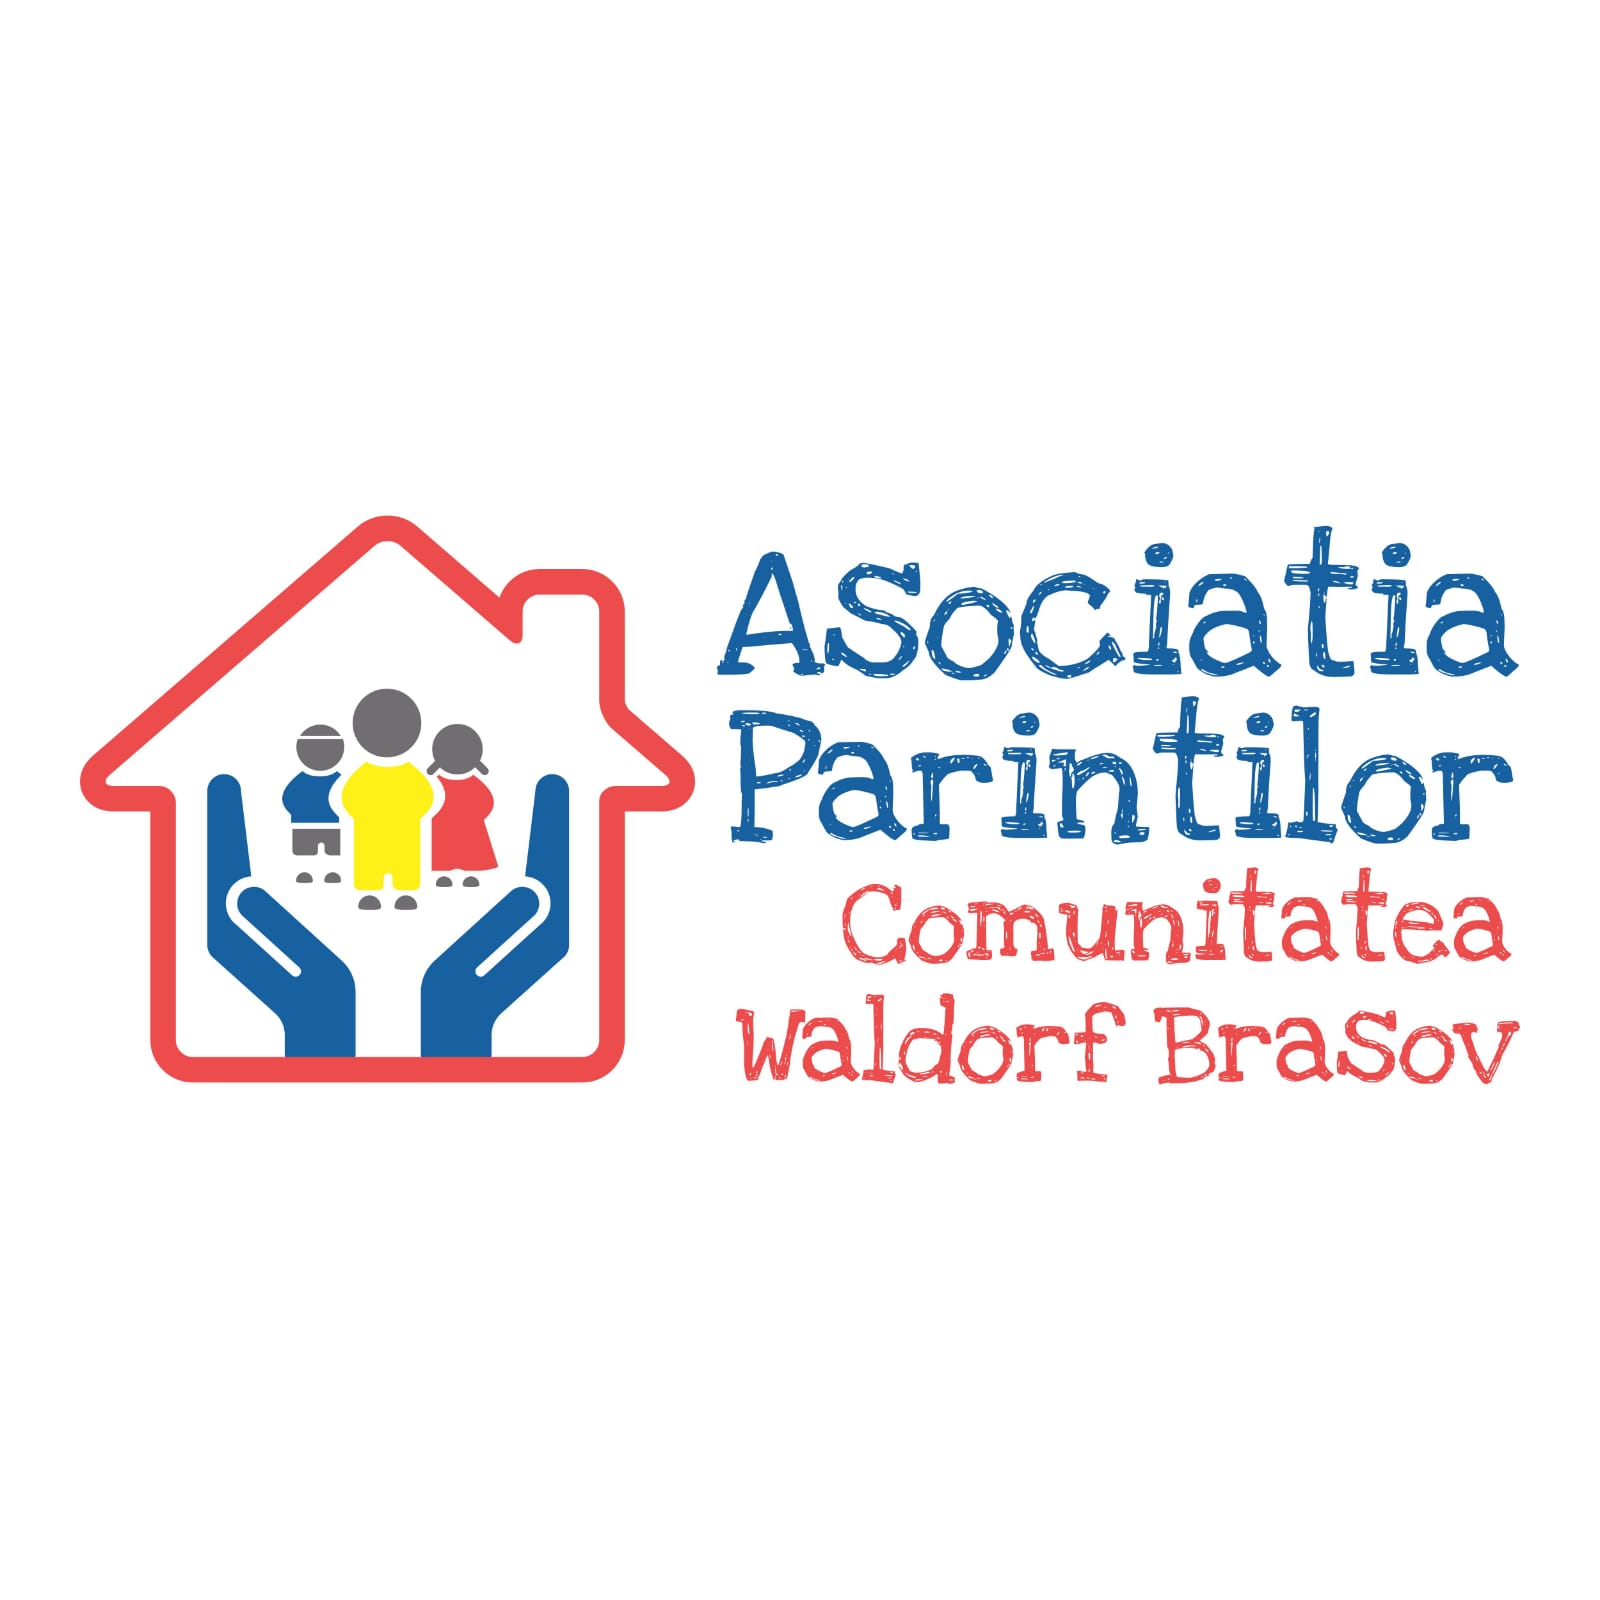 Asociatia Parintilor Comunitatea Waldorf Brasov logo